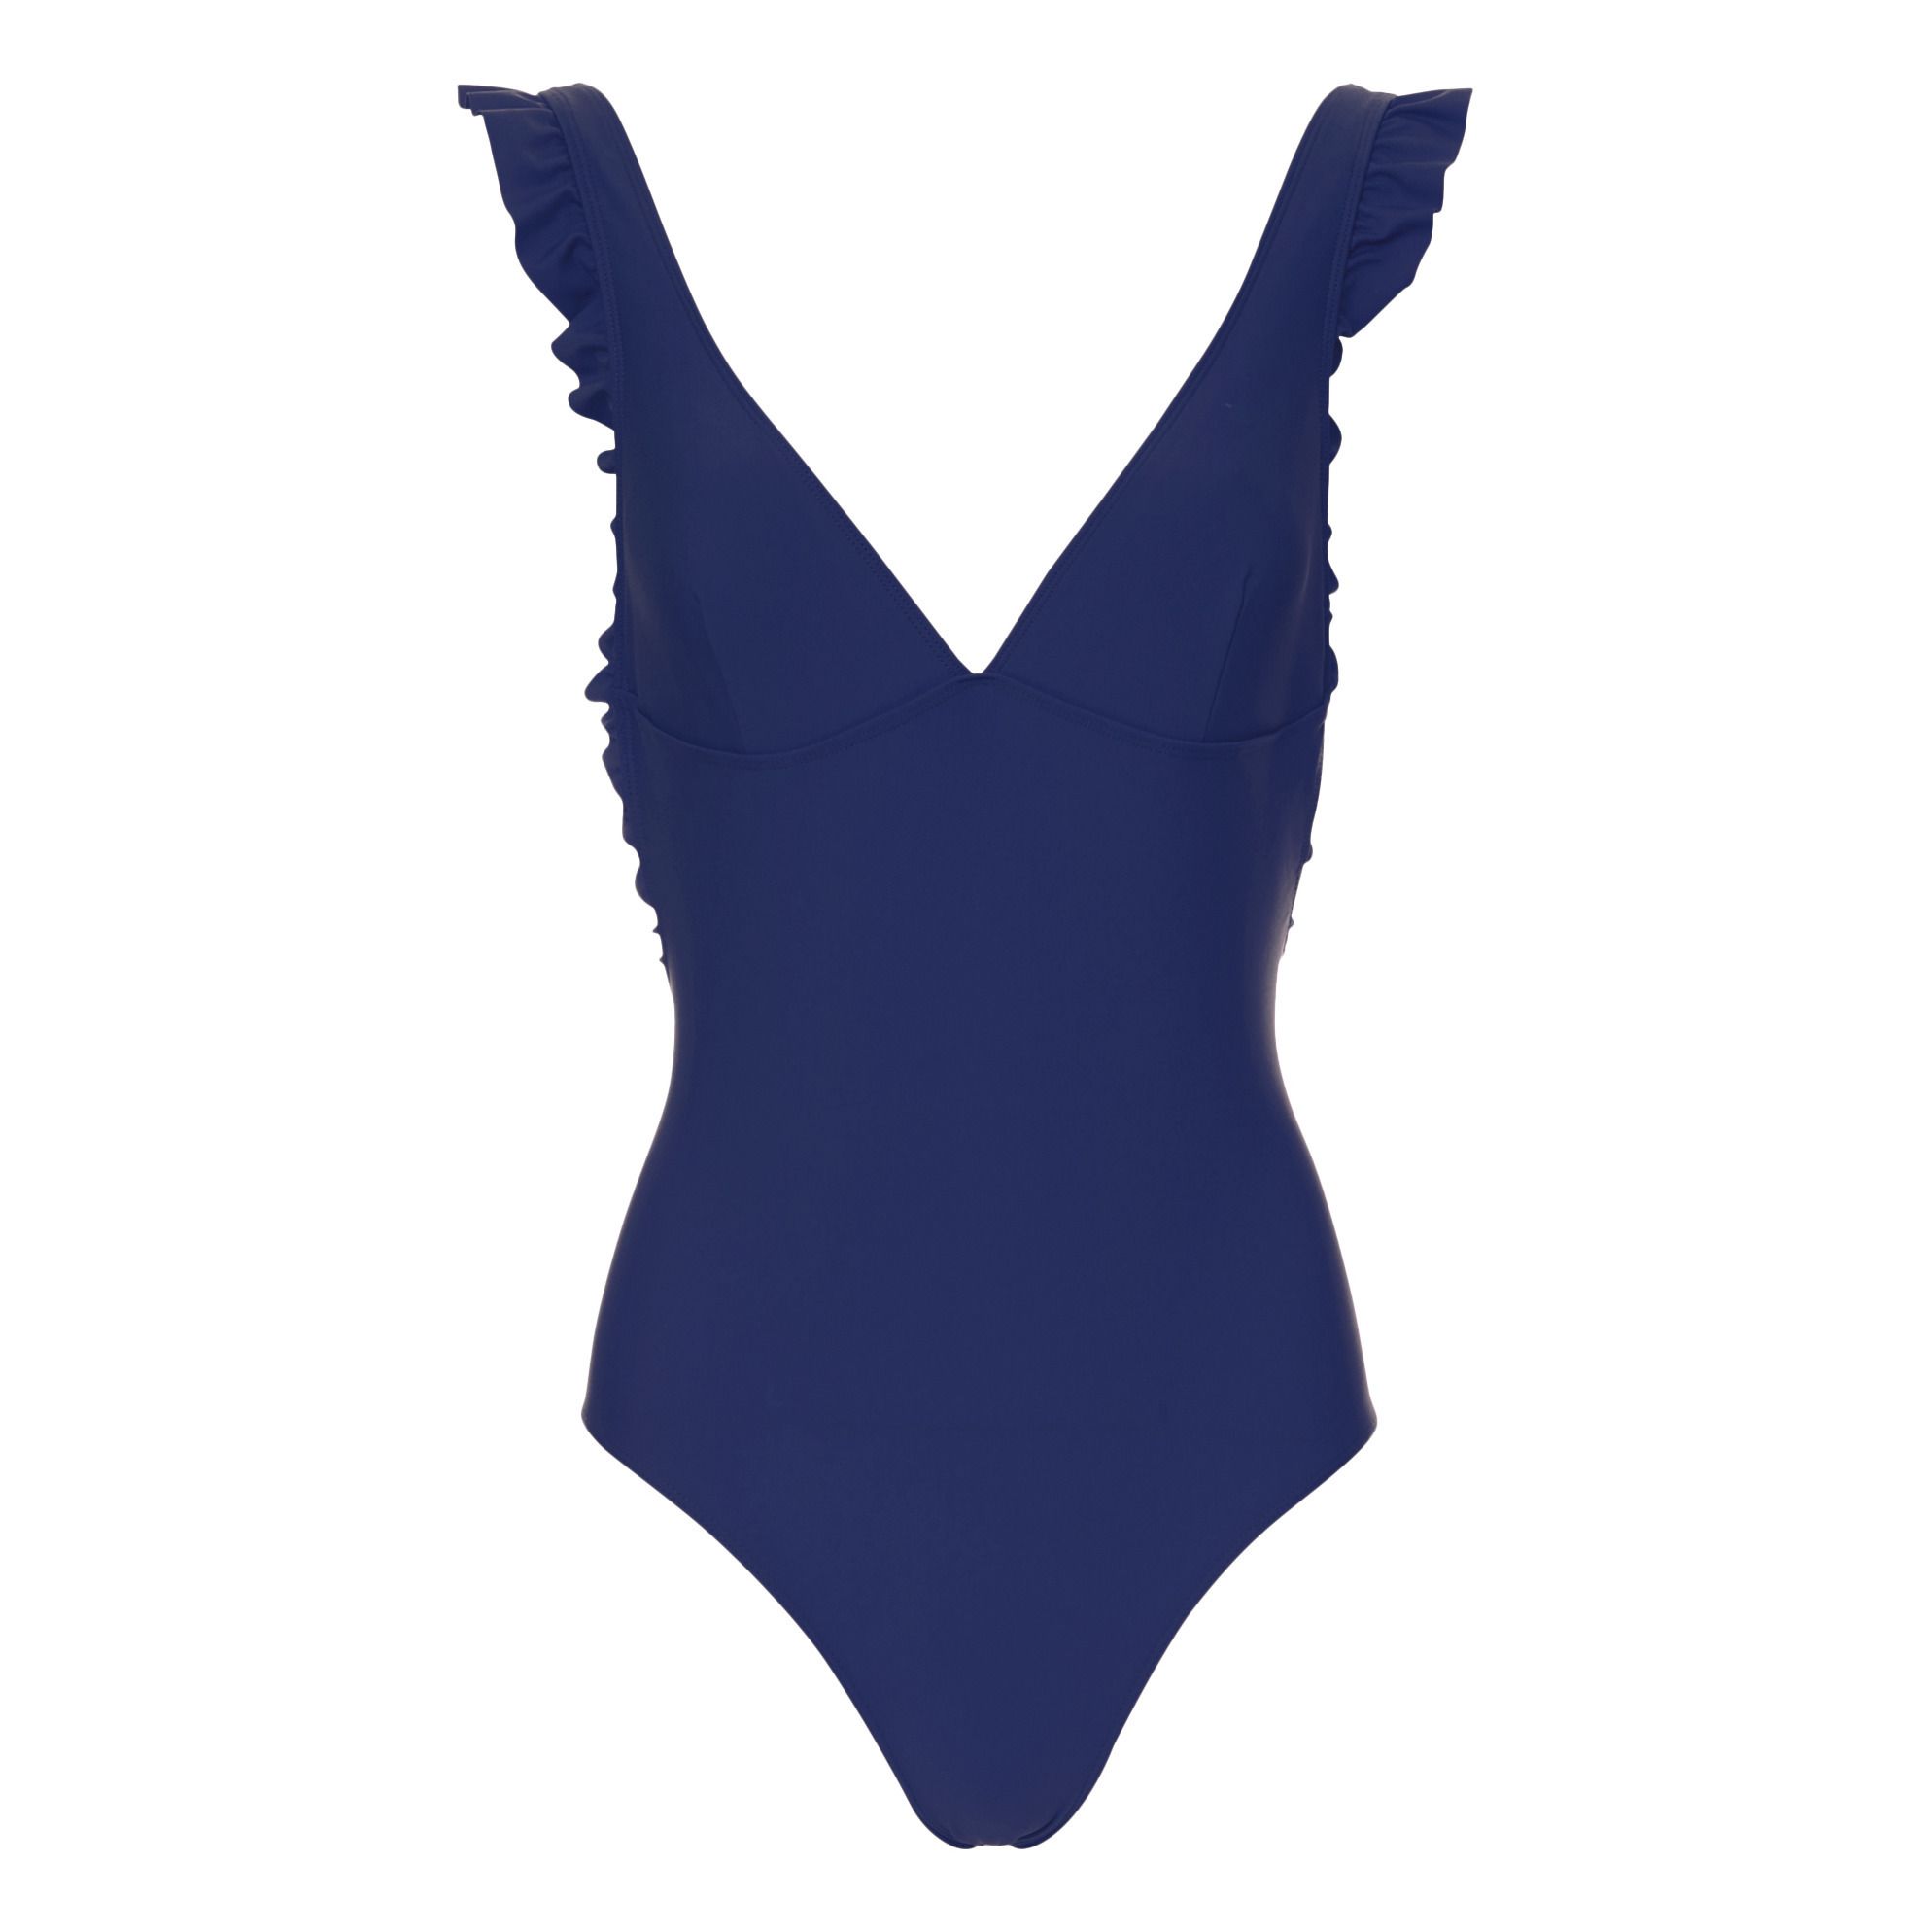 Canopea - Tara Swimsuit - Navy blue | Smallable